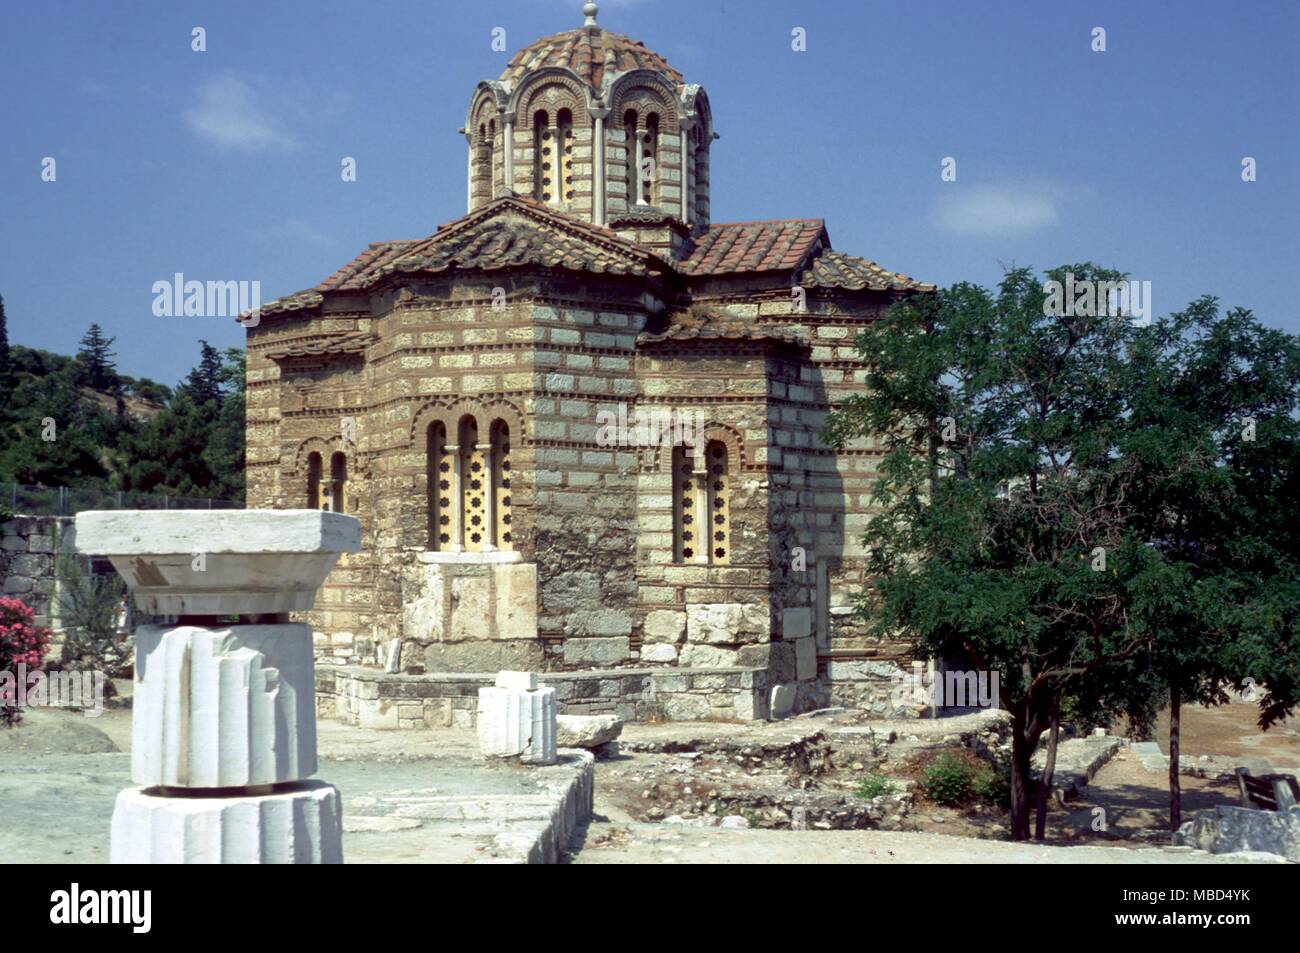 La iglesia bizantina en el ágora griega, Atenas. Foto de stock